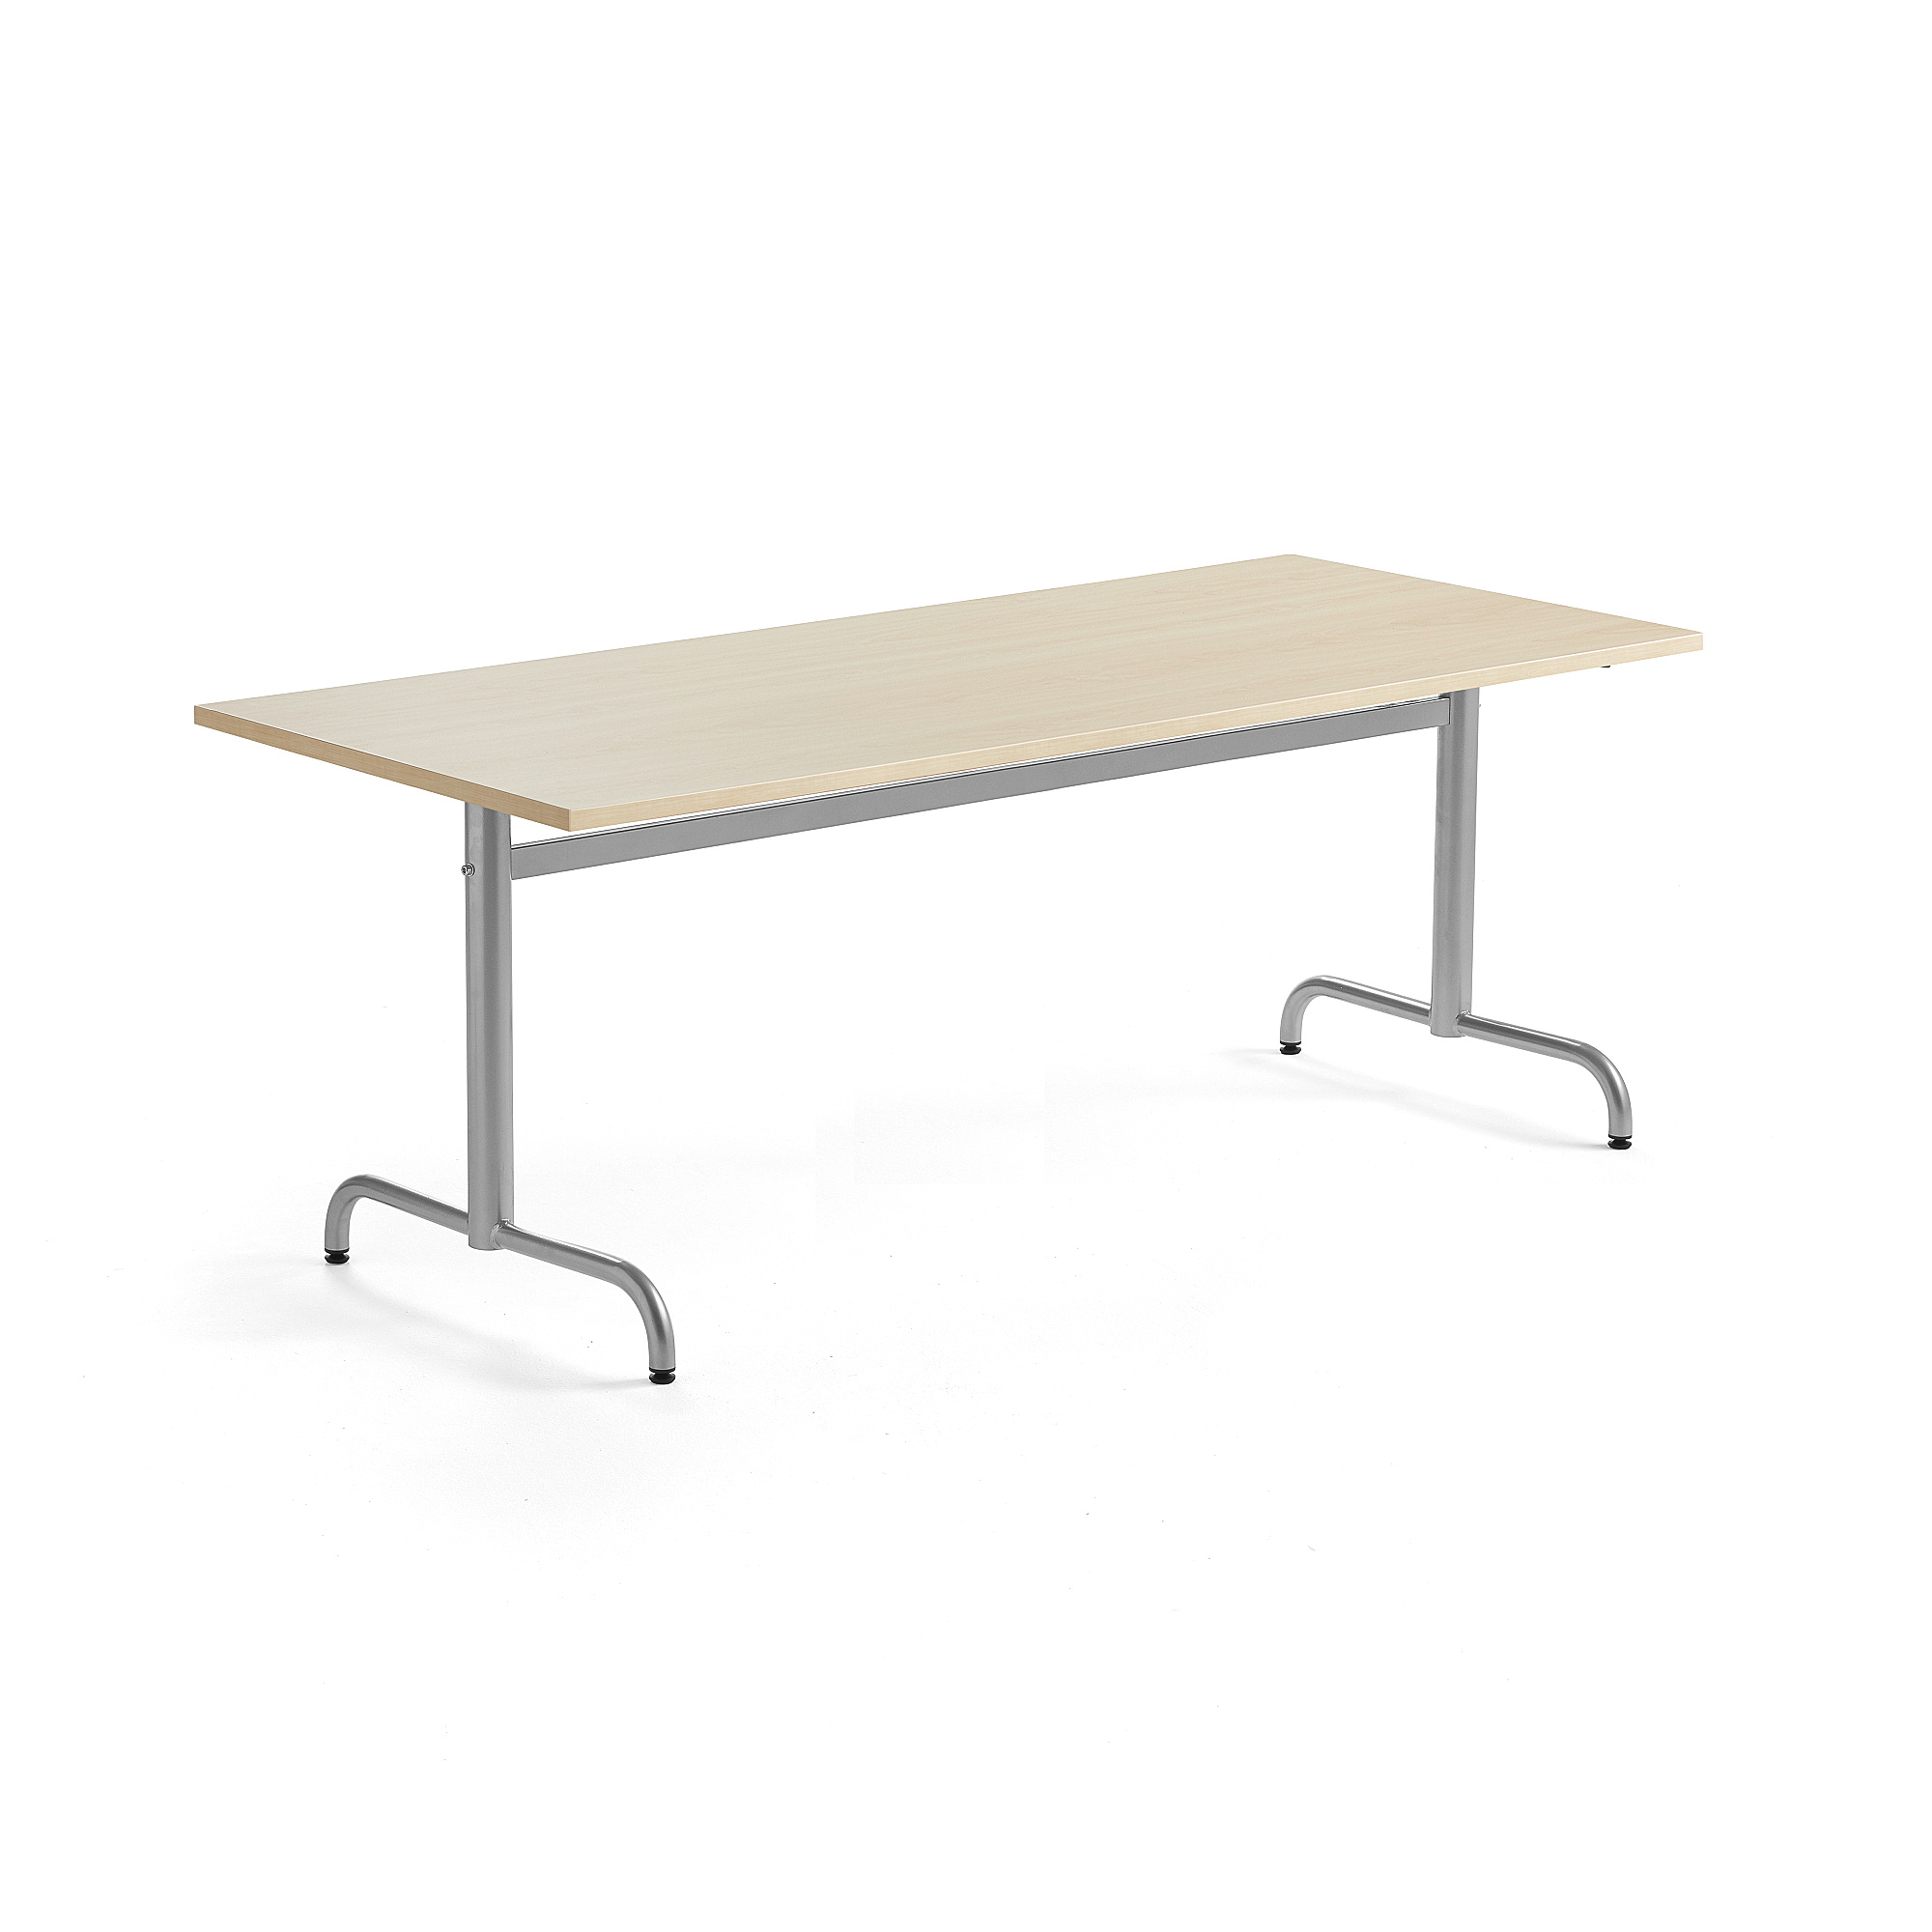 Stůl PLURAL, 1800x800x600 mm, akustická HPL deska, bříza, stříbrná